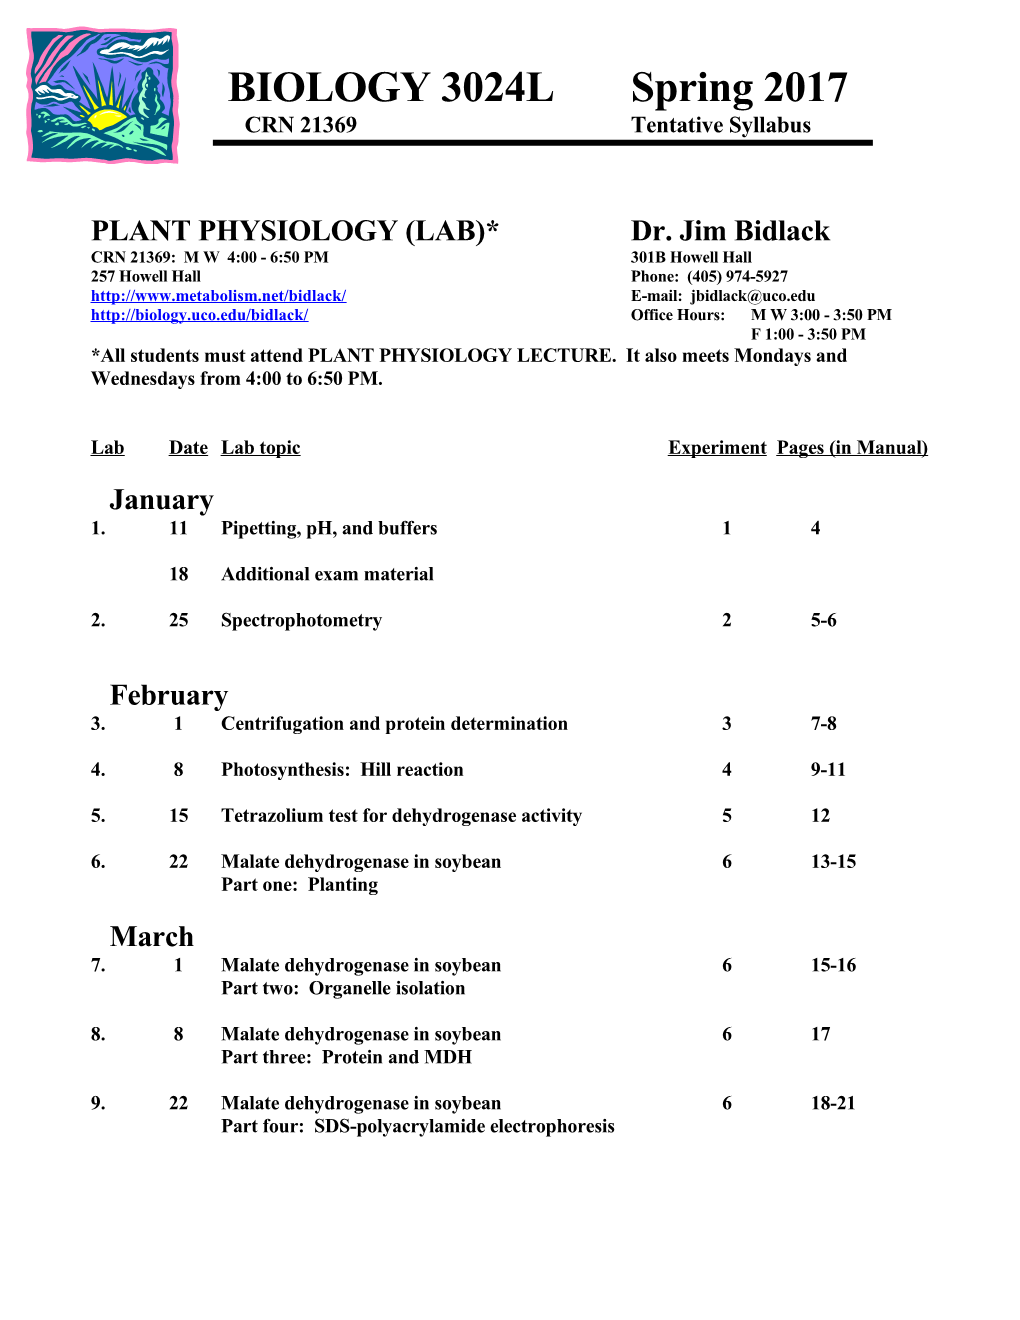 PLANT PHYSIOLOGY (LAB)* Dr. Jim Bidlack